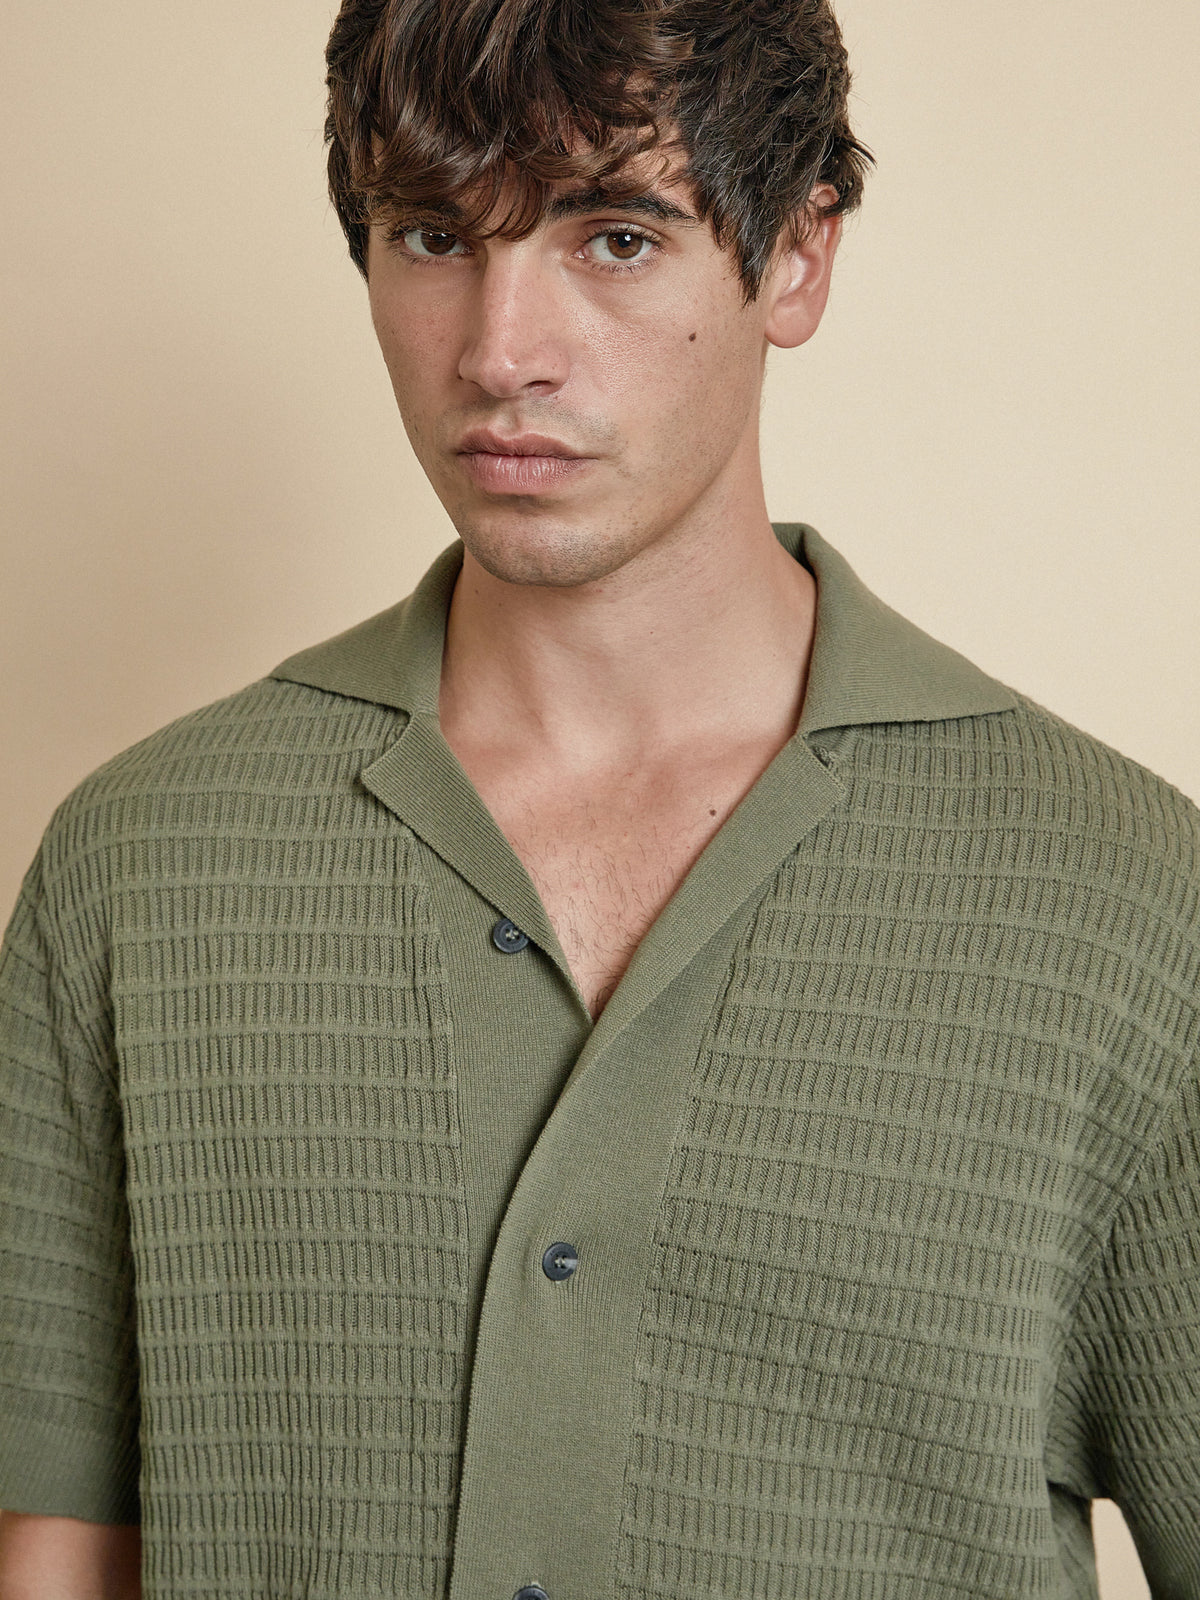 Zanito Knit Shirt in Olive